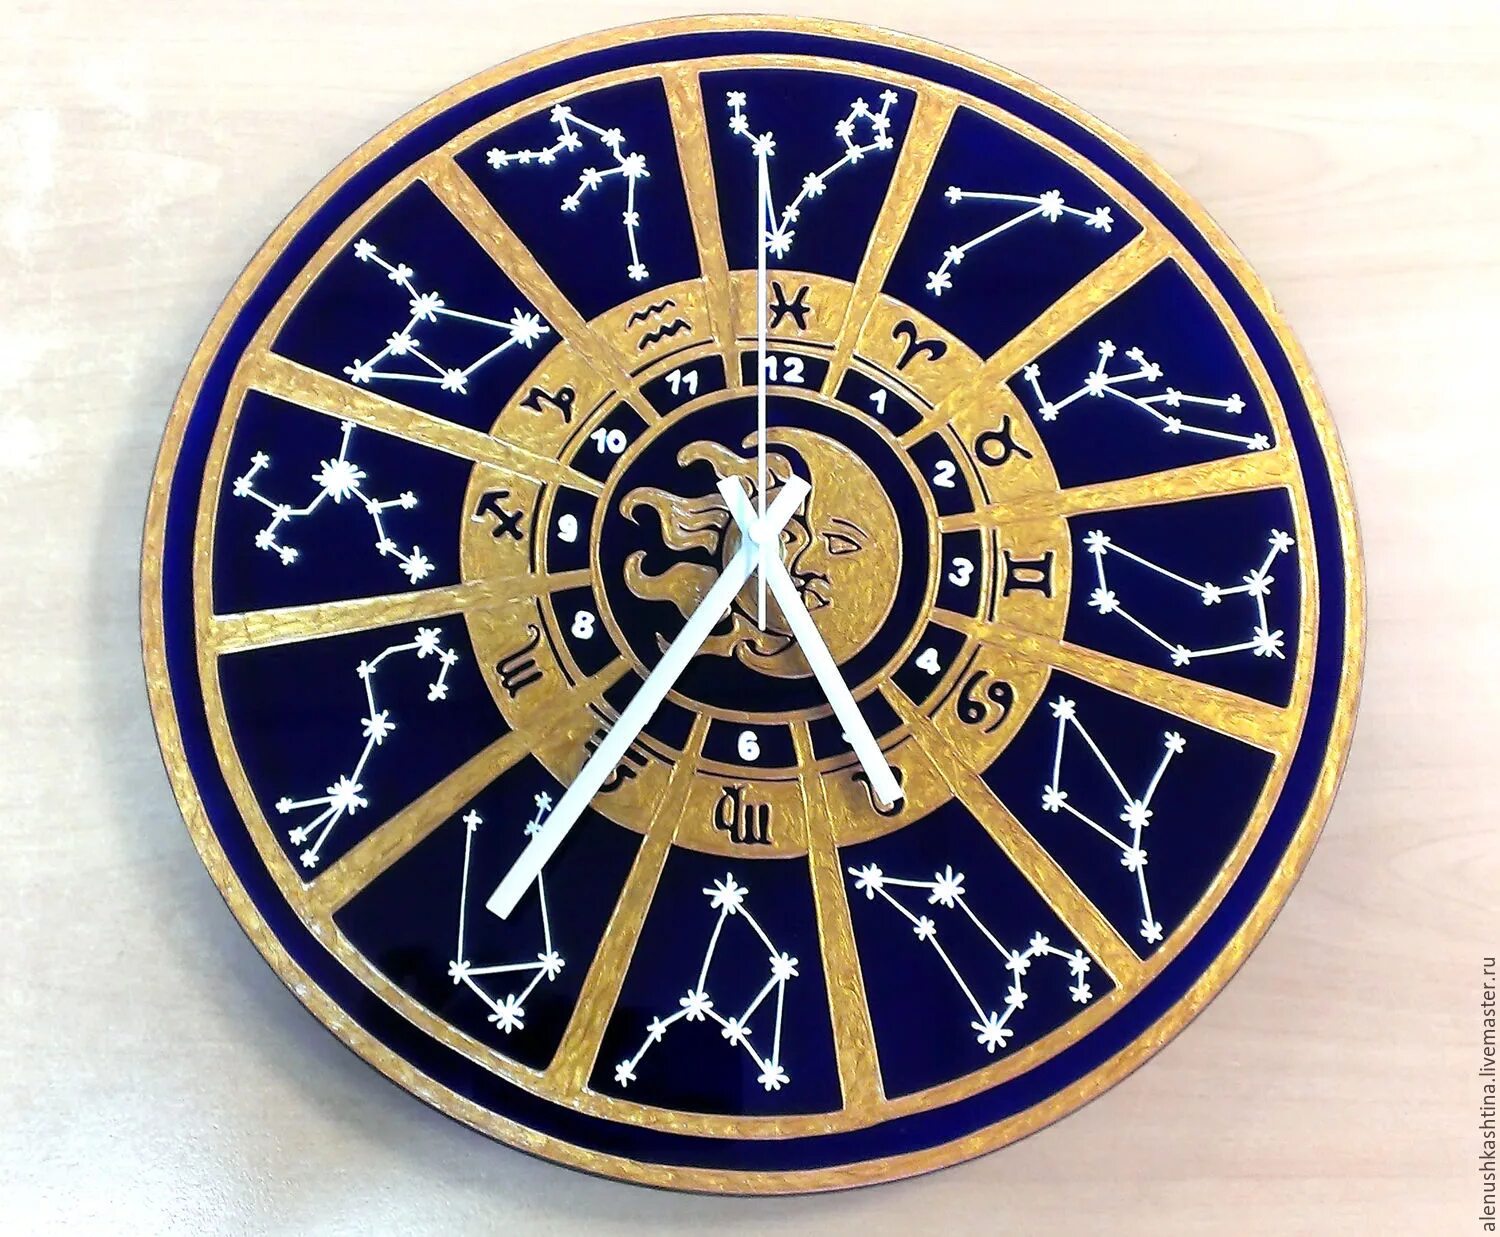 Часы для астролога. Циферблат со знаками зодиака. Часы настенные астрологические. Настенные часы "знаки зодиака".